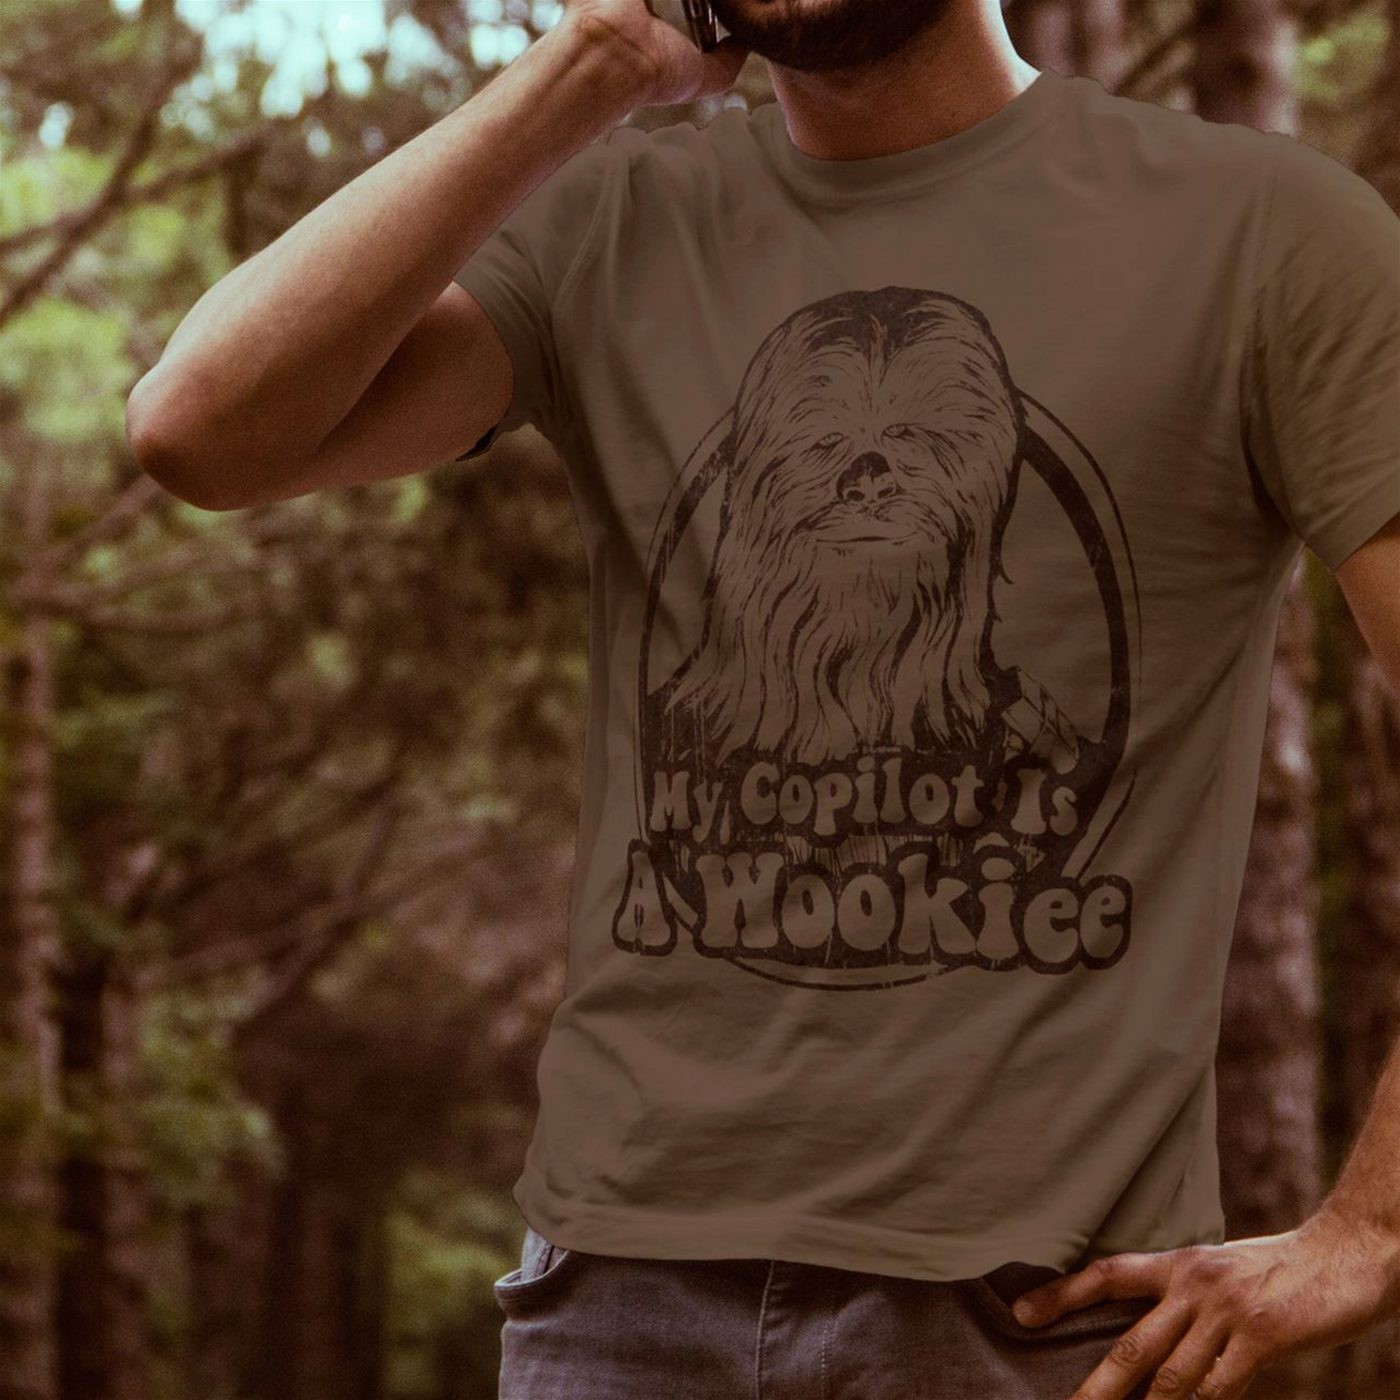 Star Wars Wookie Copilot Men's T-Shirt